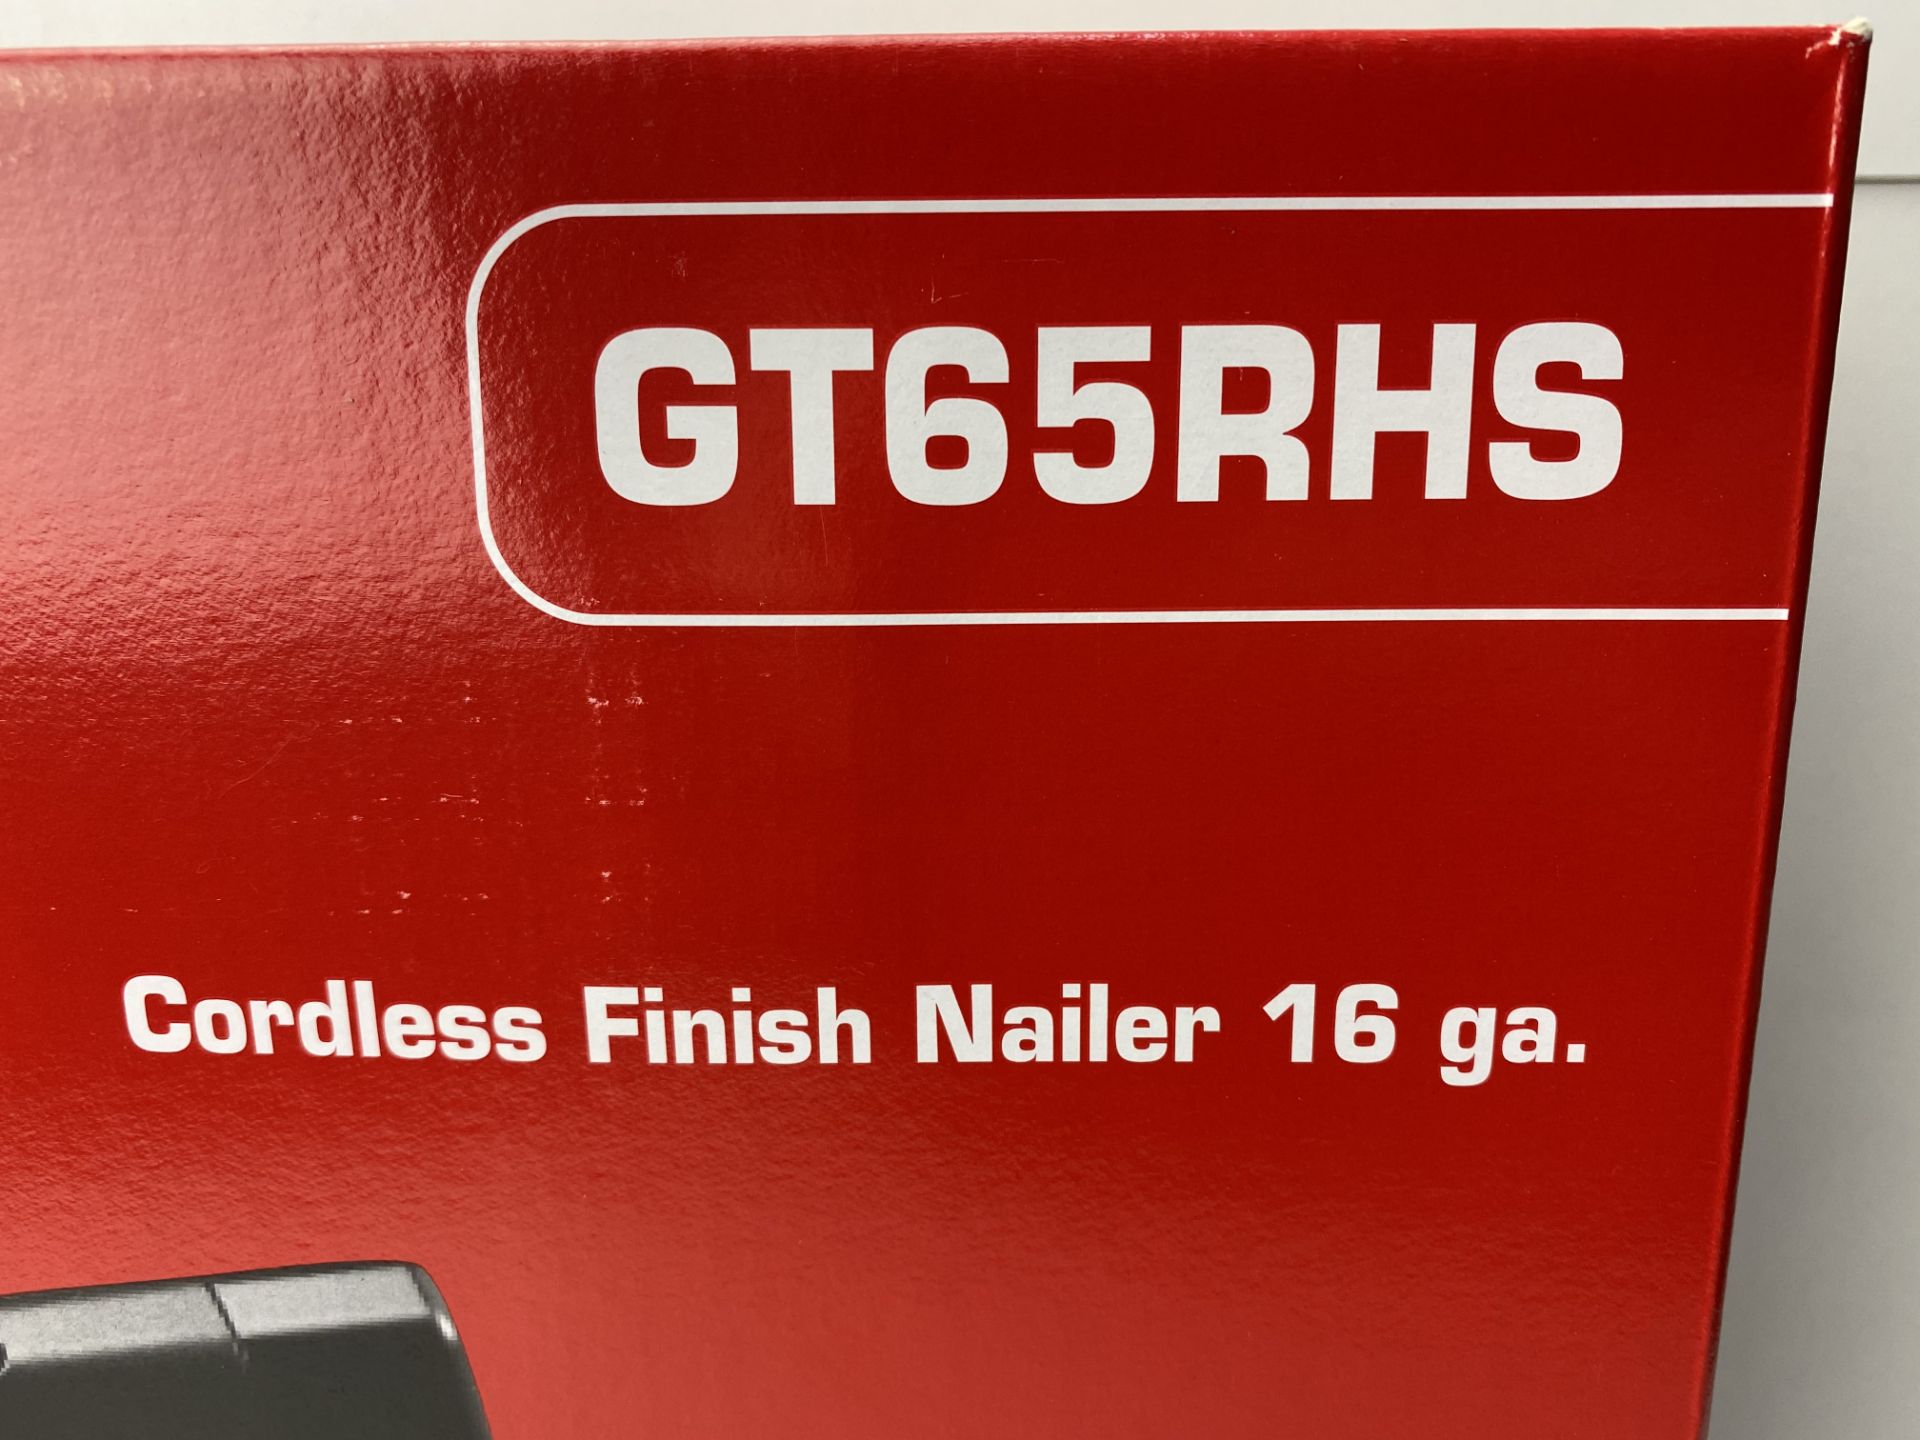 SENCO GT65RHS GAS NAIL GUN SECOND FIX 16 GAUGE NAILER - Image 2 of 4